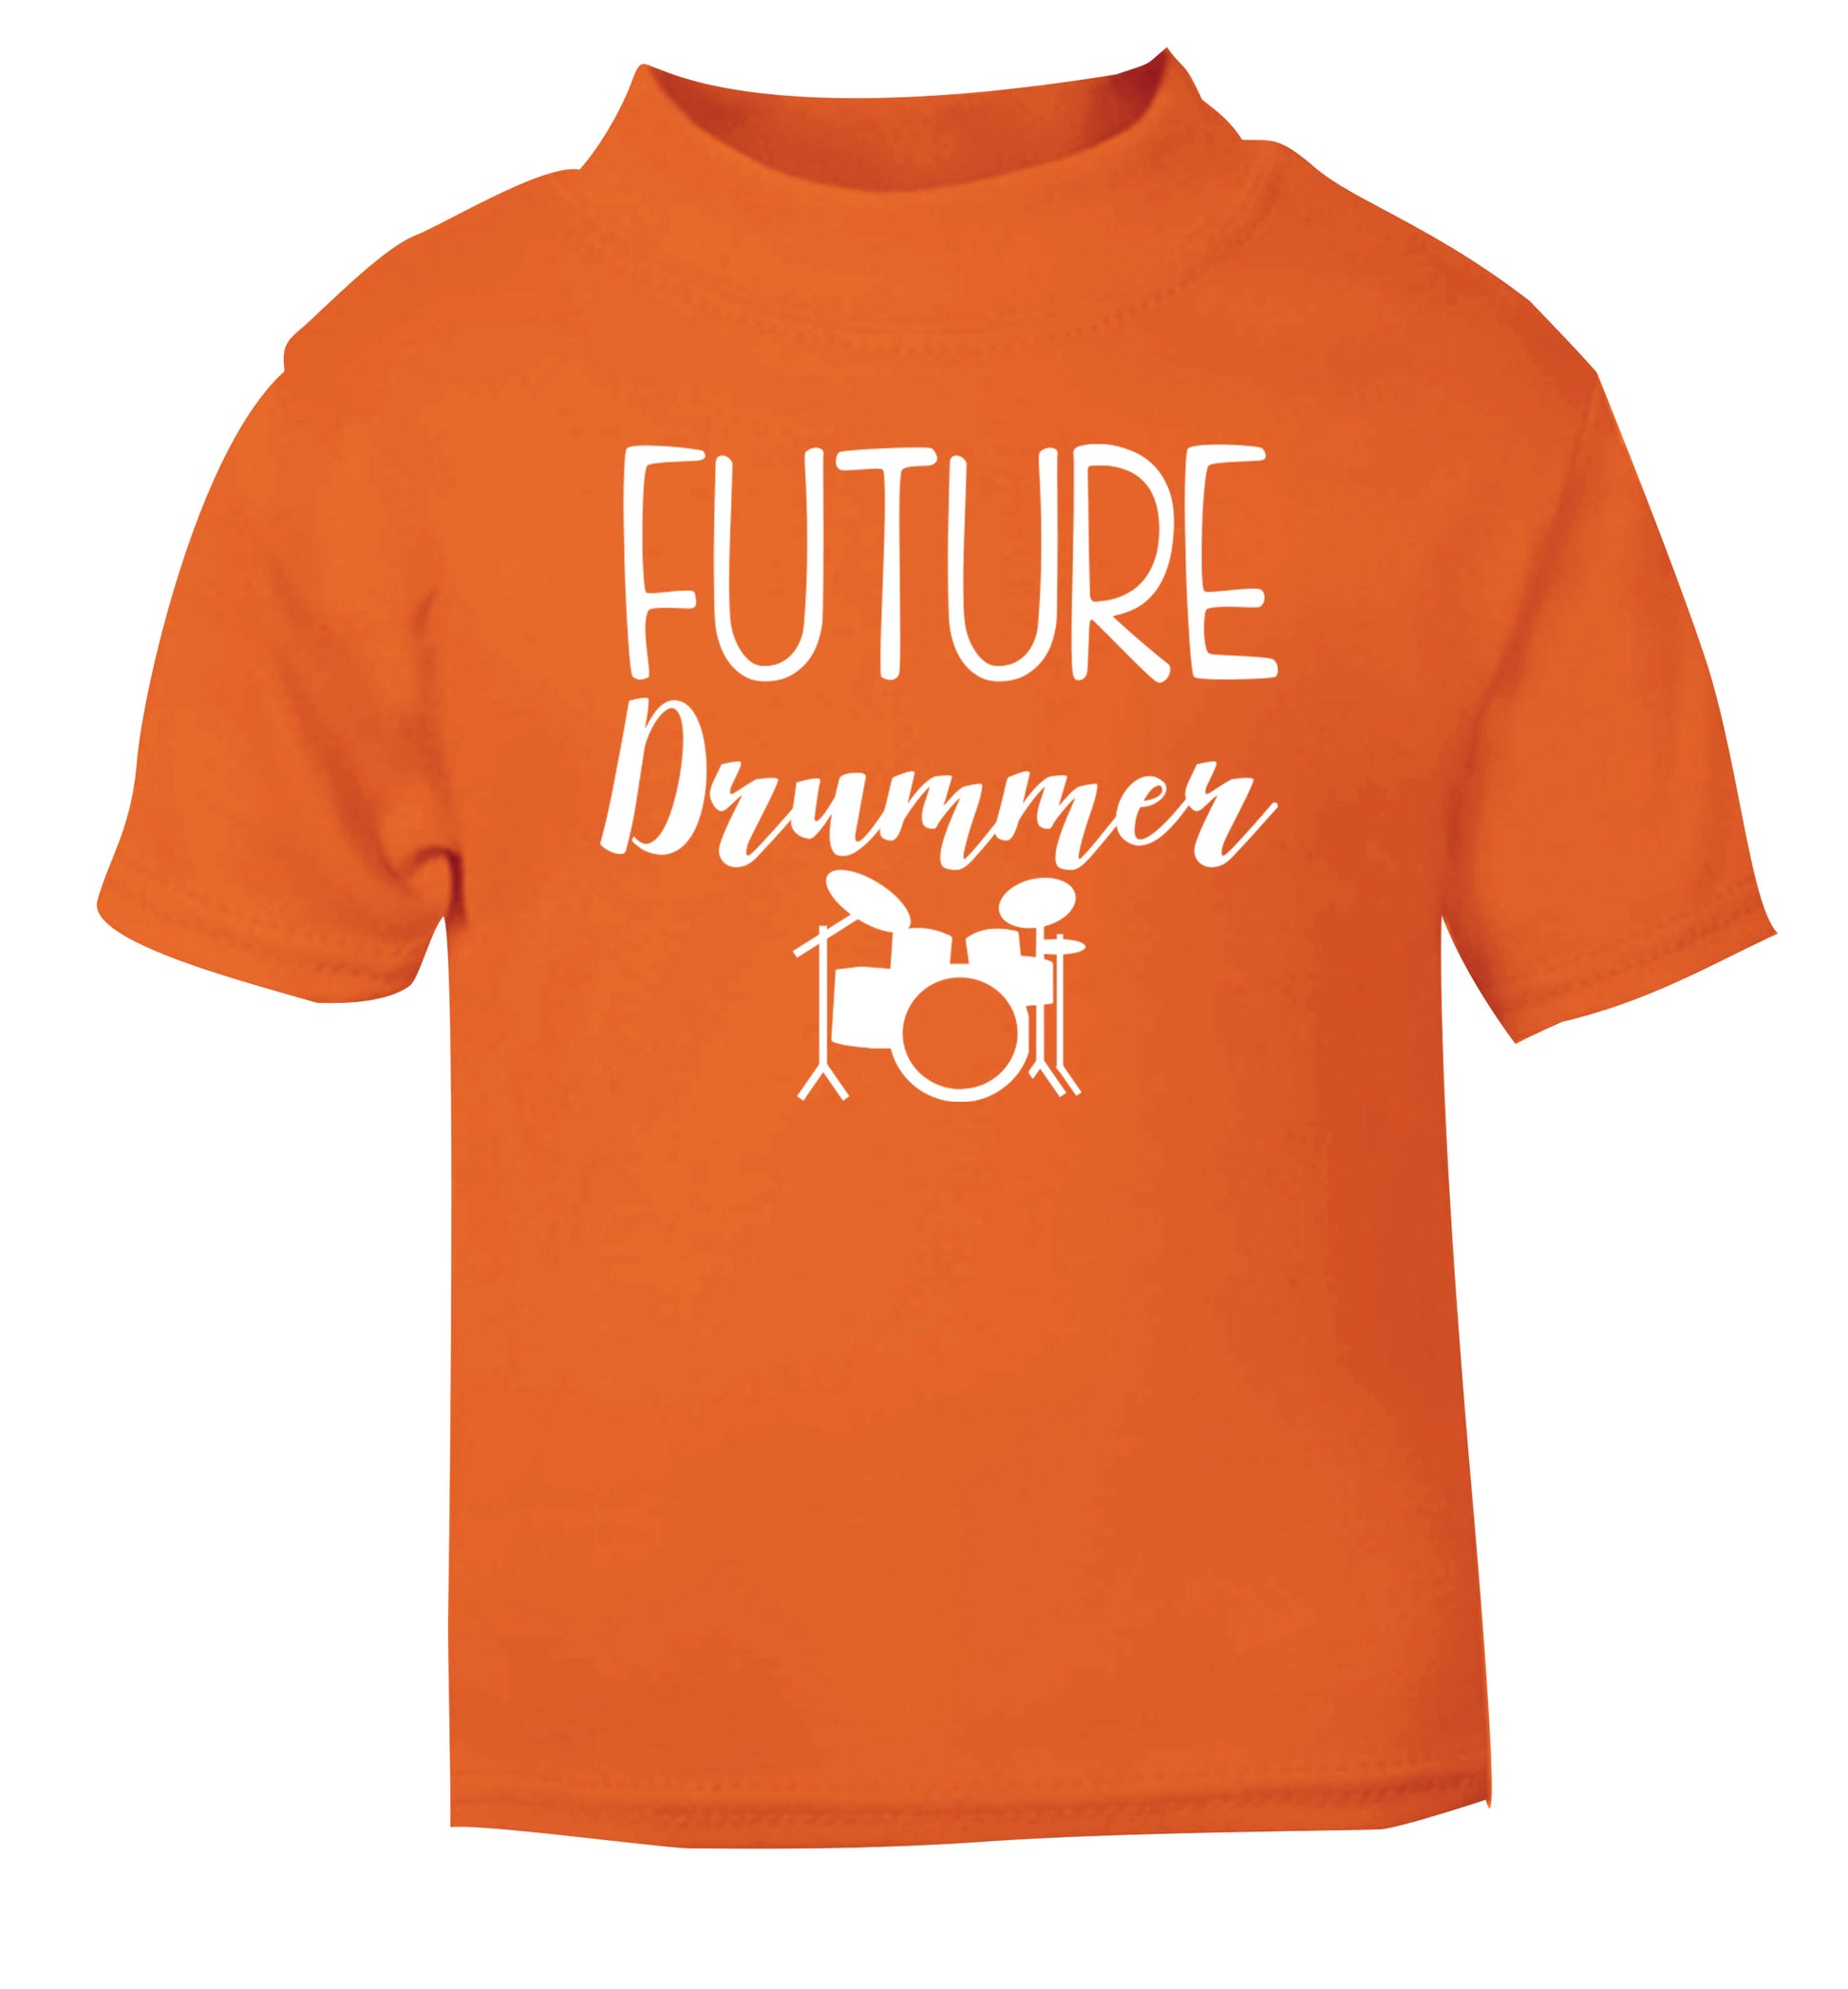 Future drummer orange Baby Toddler Tshirt 2 Years